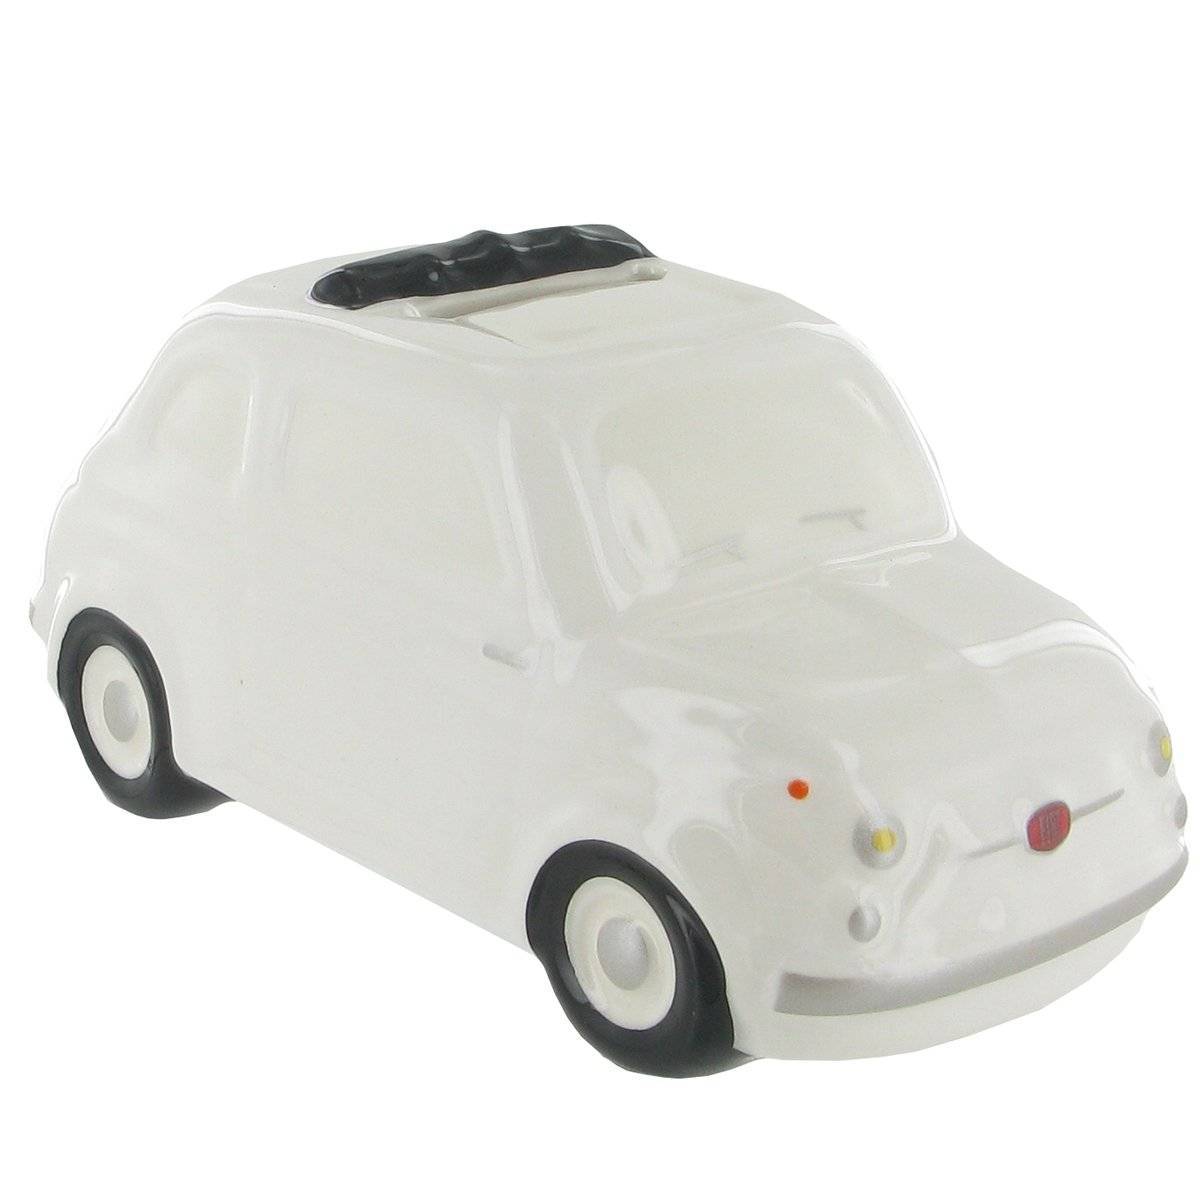 Fiat 500 Money box ceramic white Small model